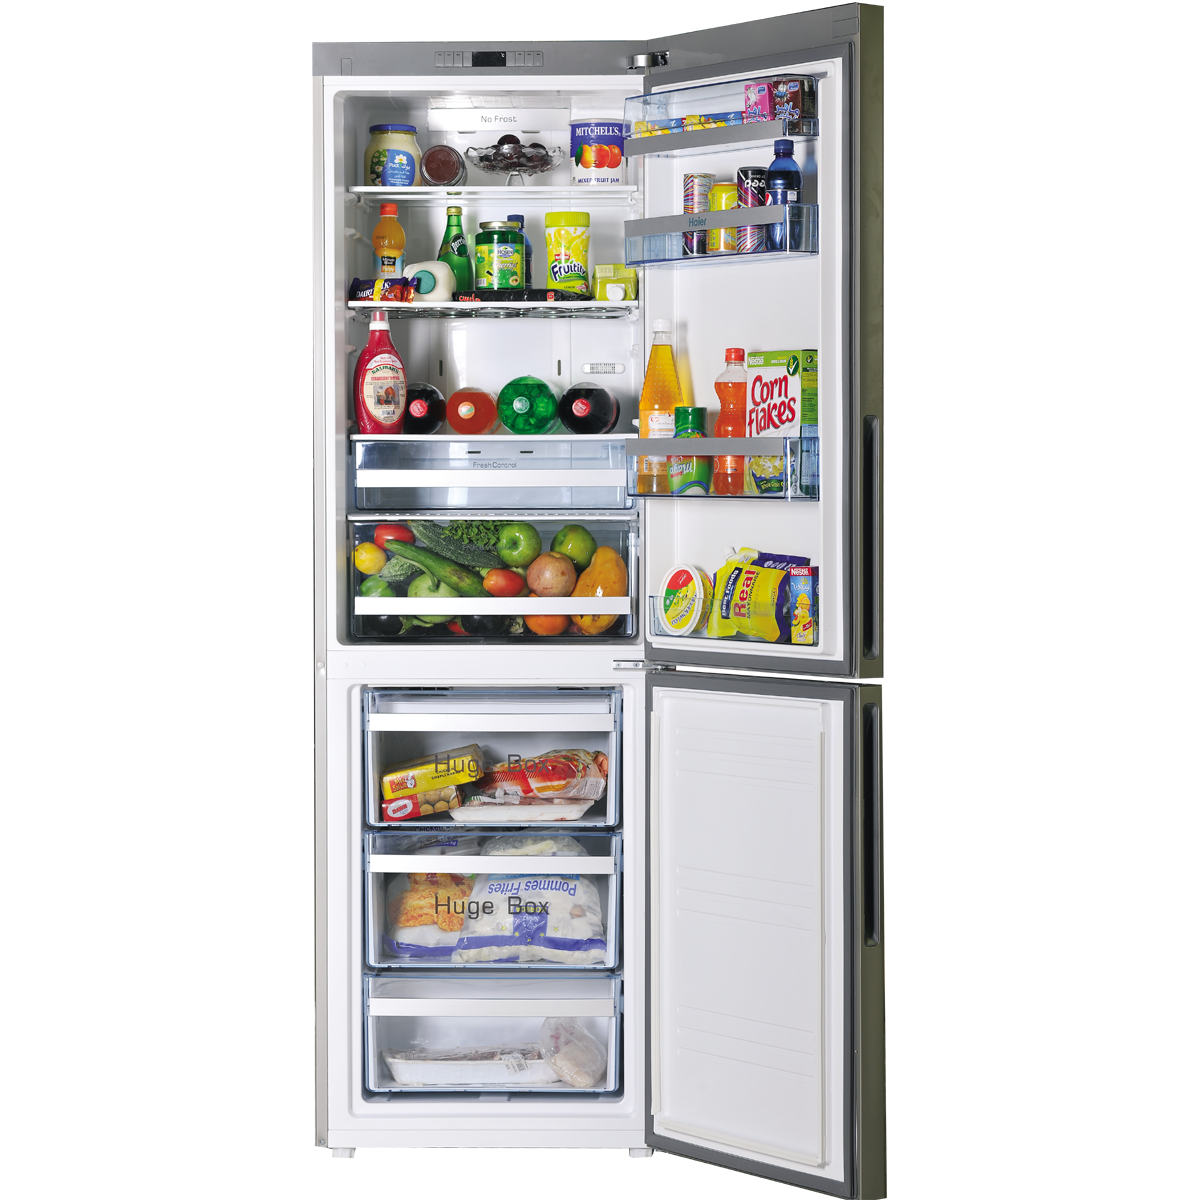 Refrigerator Png Image - Refrigerator, Transparent background PNG HD thumbnail